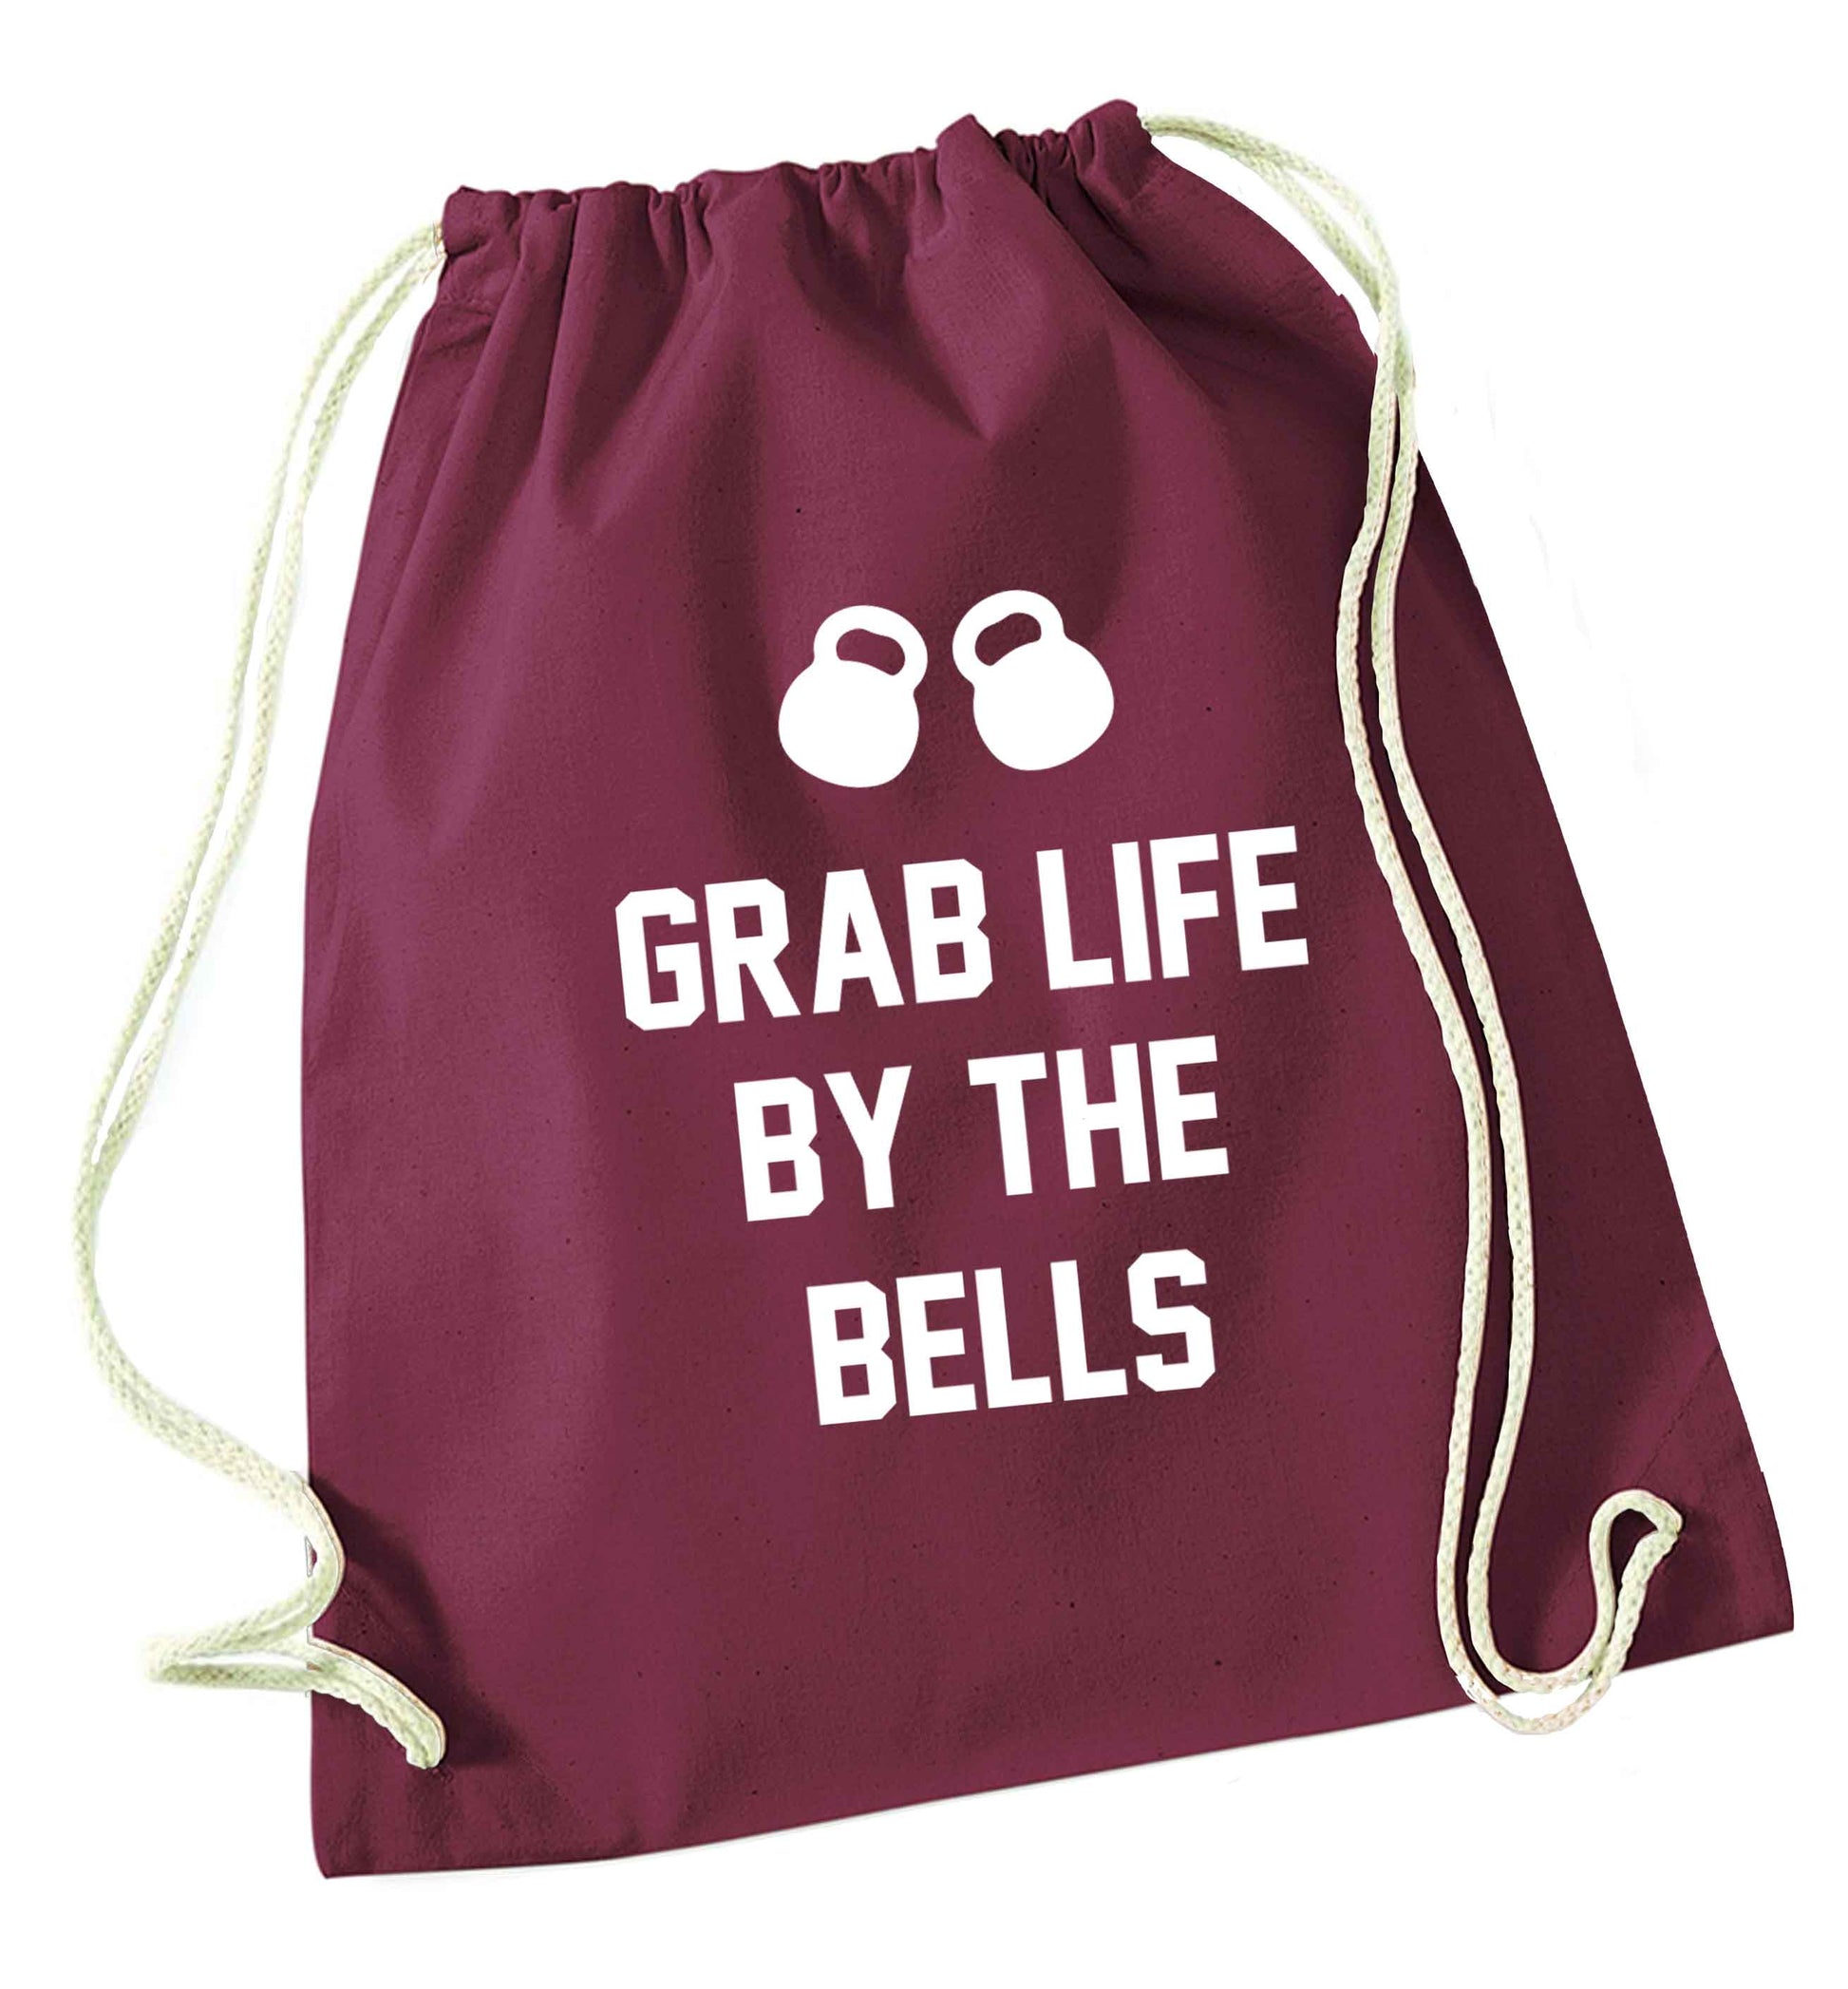 Grab life by the bells maroon drawstring bag